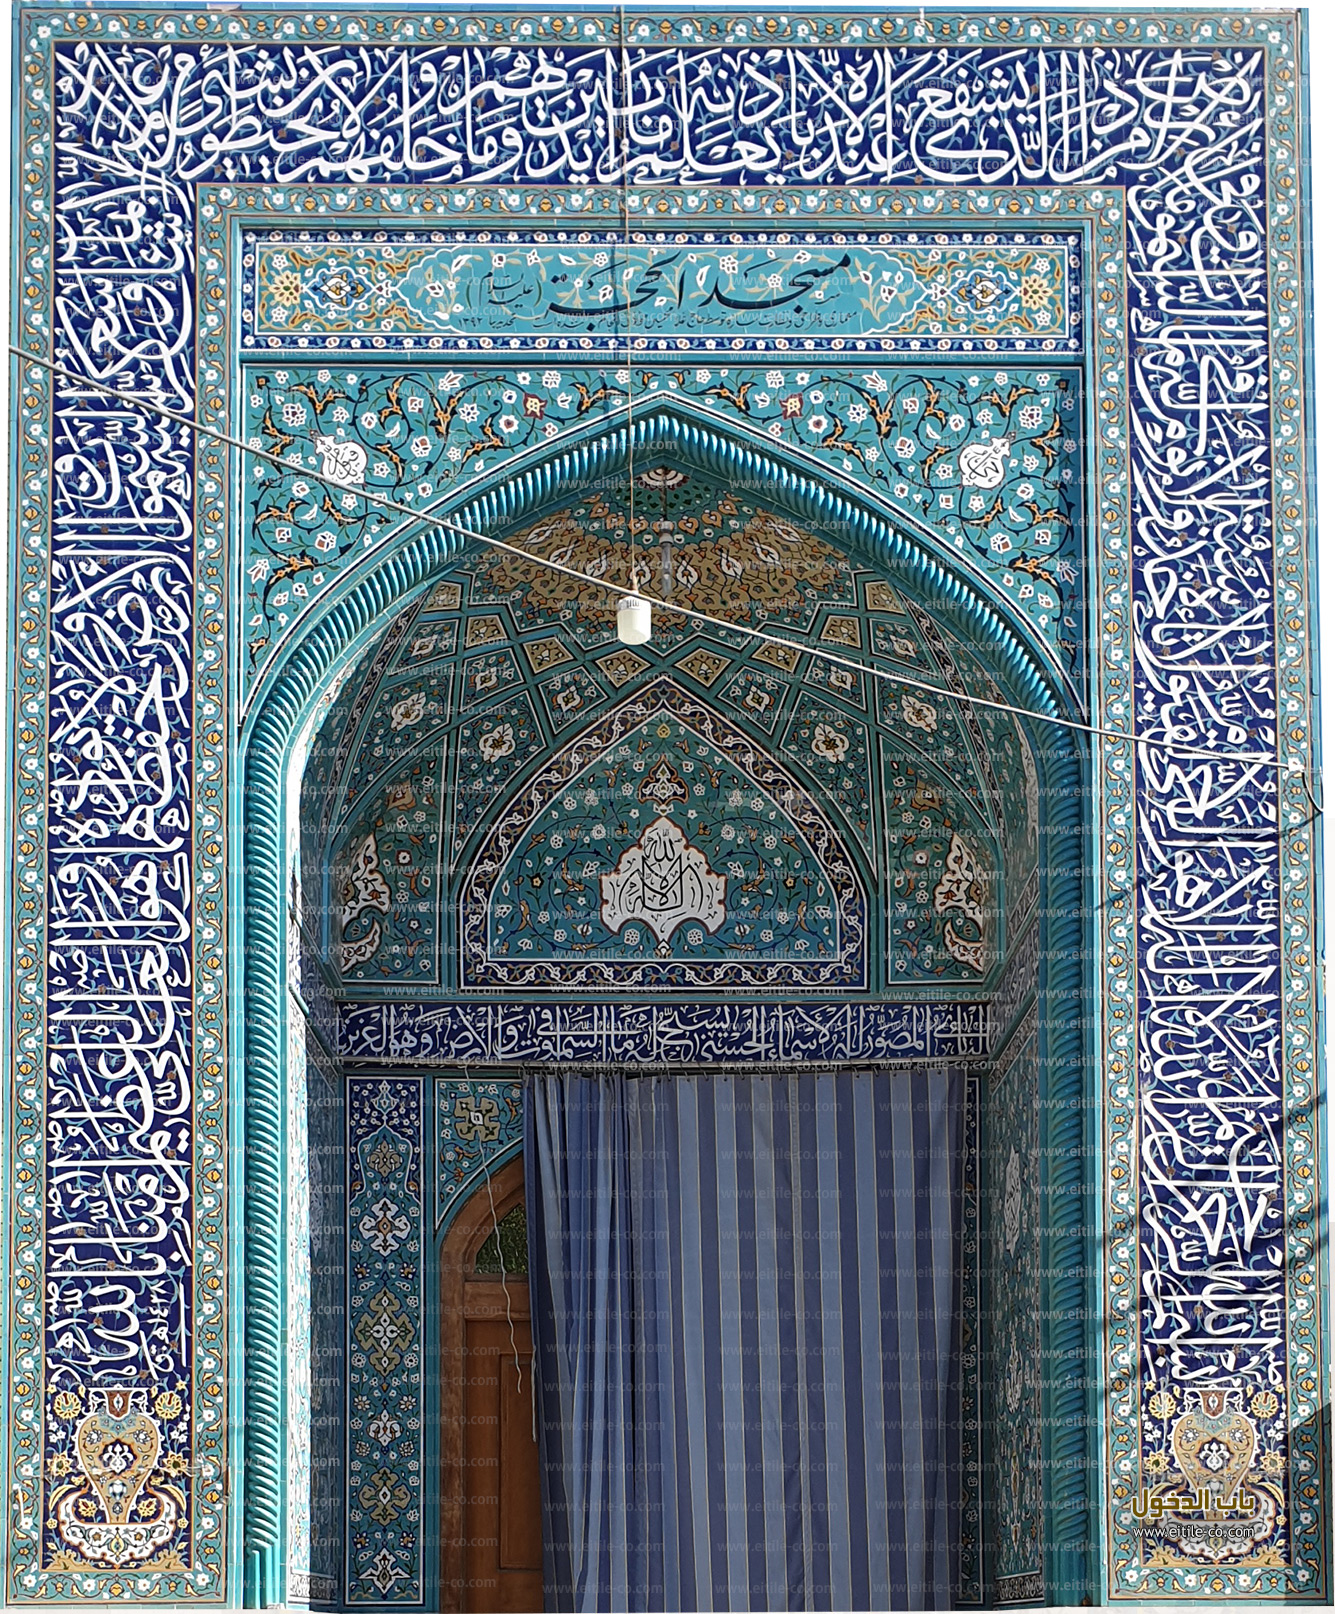 Mosque tiles supplier, www.eitile-co.com